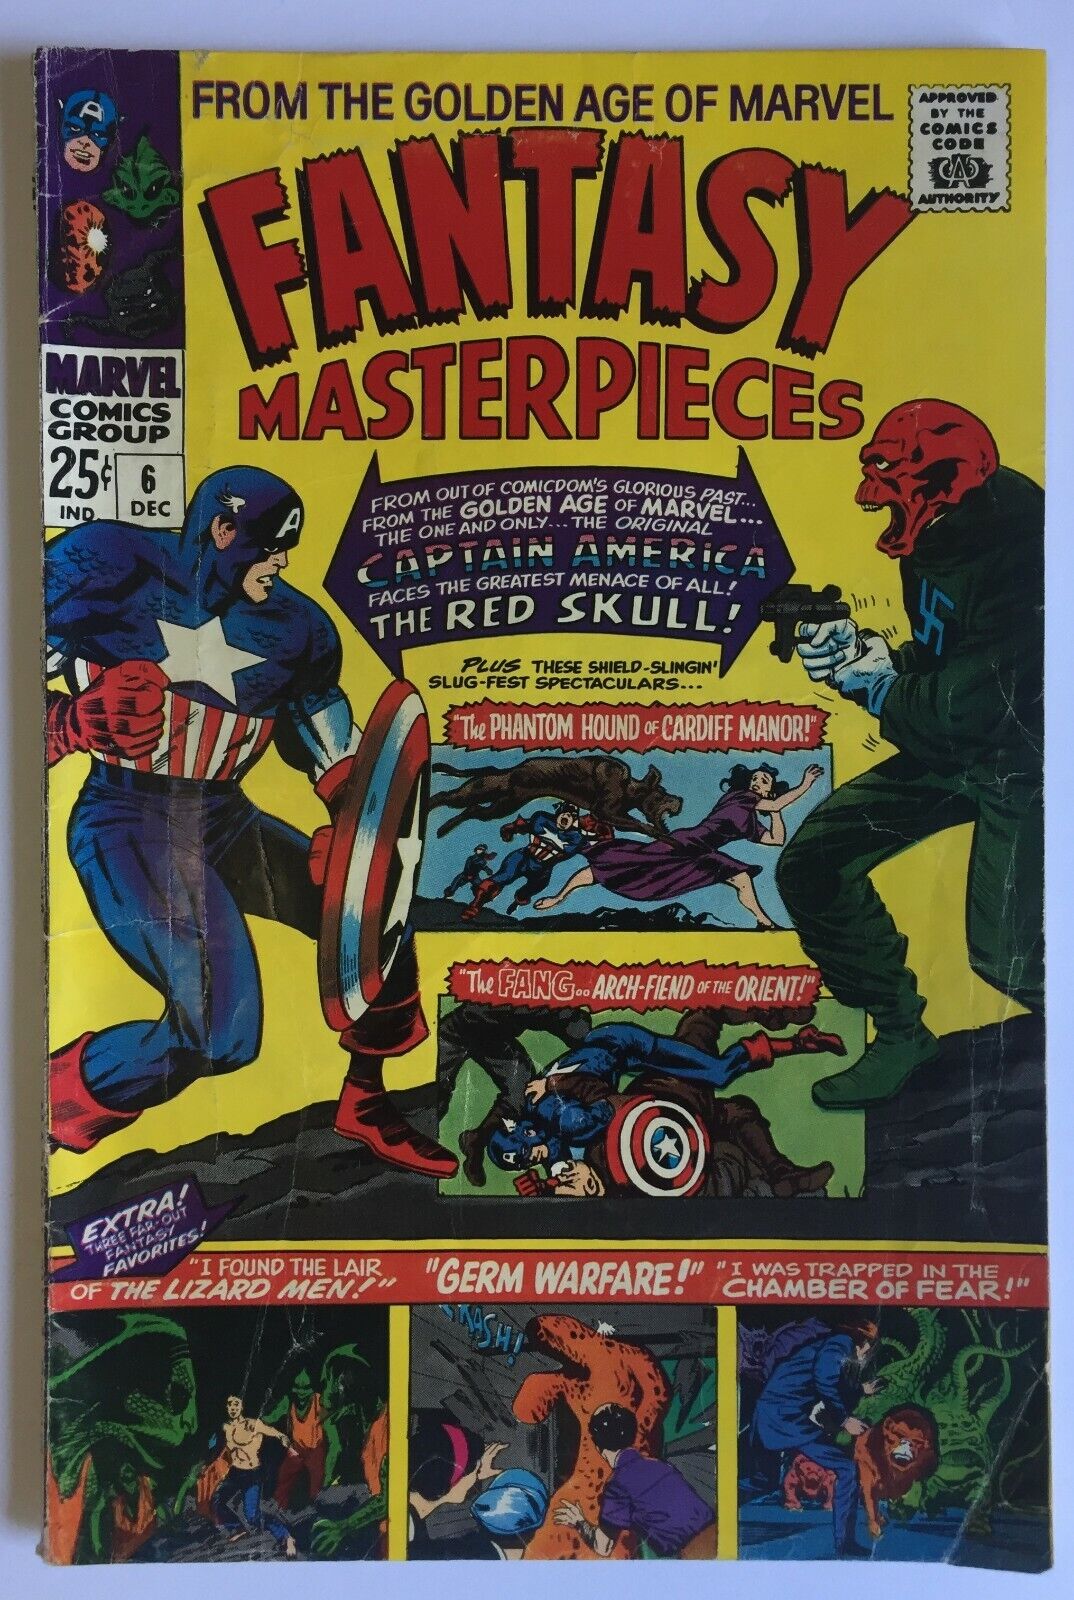 Fantasy Masterpieces #6 (Dec 1966, Marvel) Captain America Red Skull